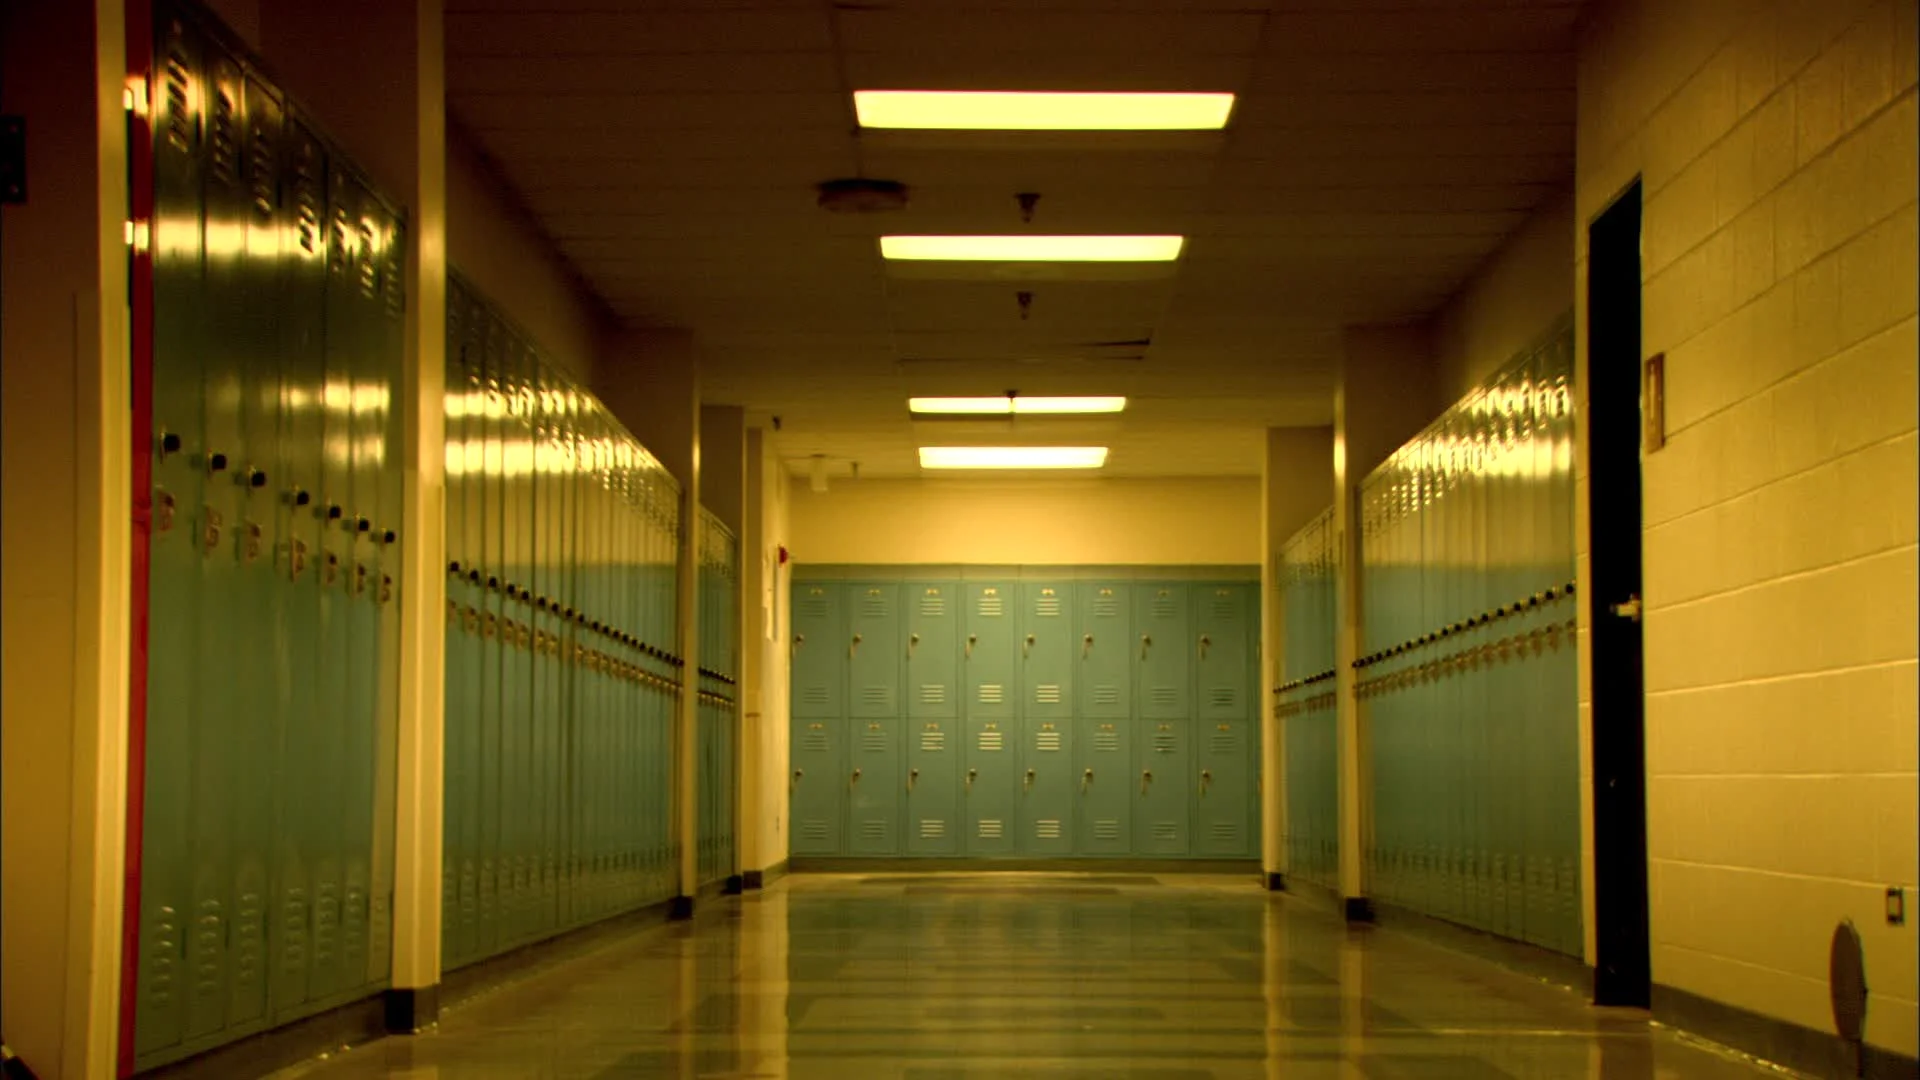 school hallway background with lockers